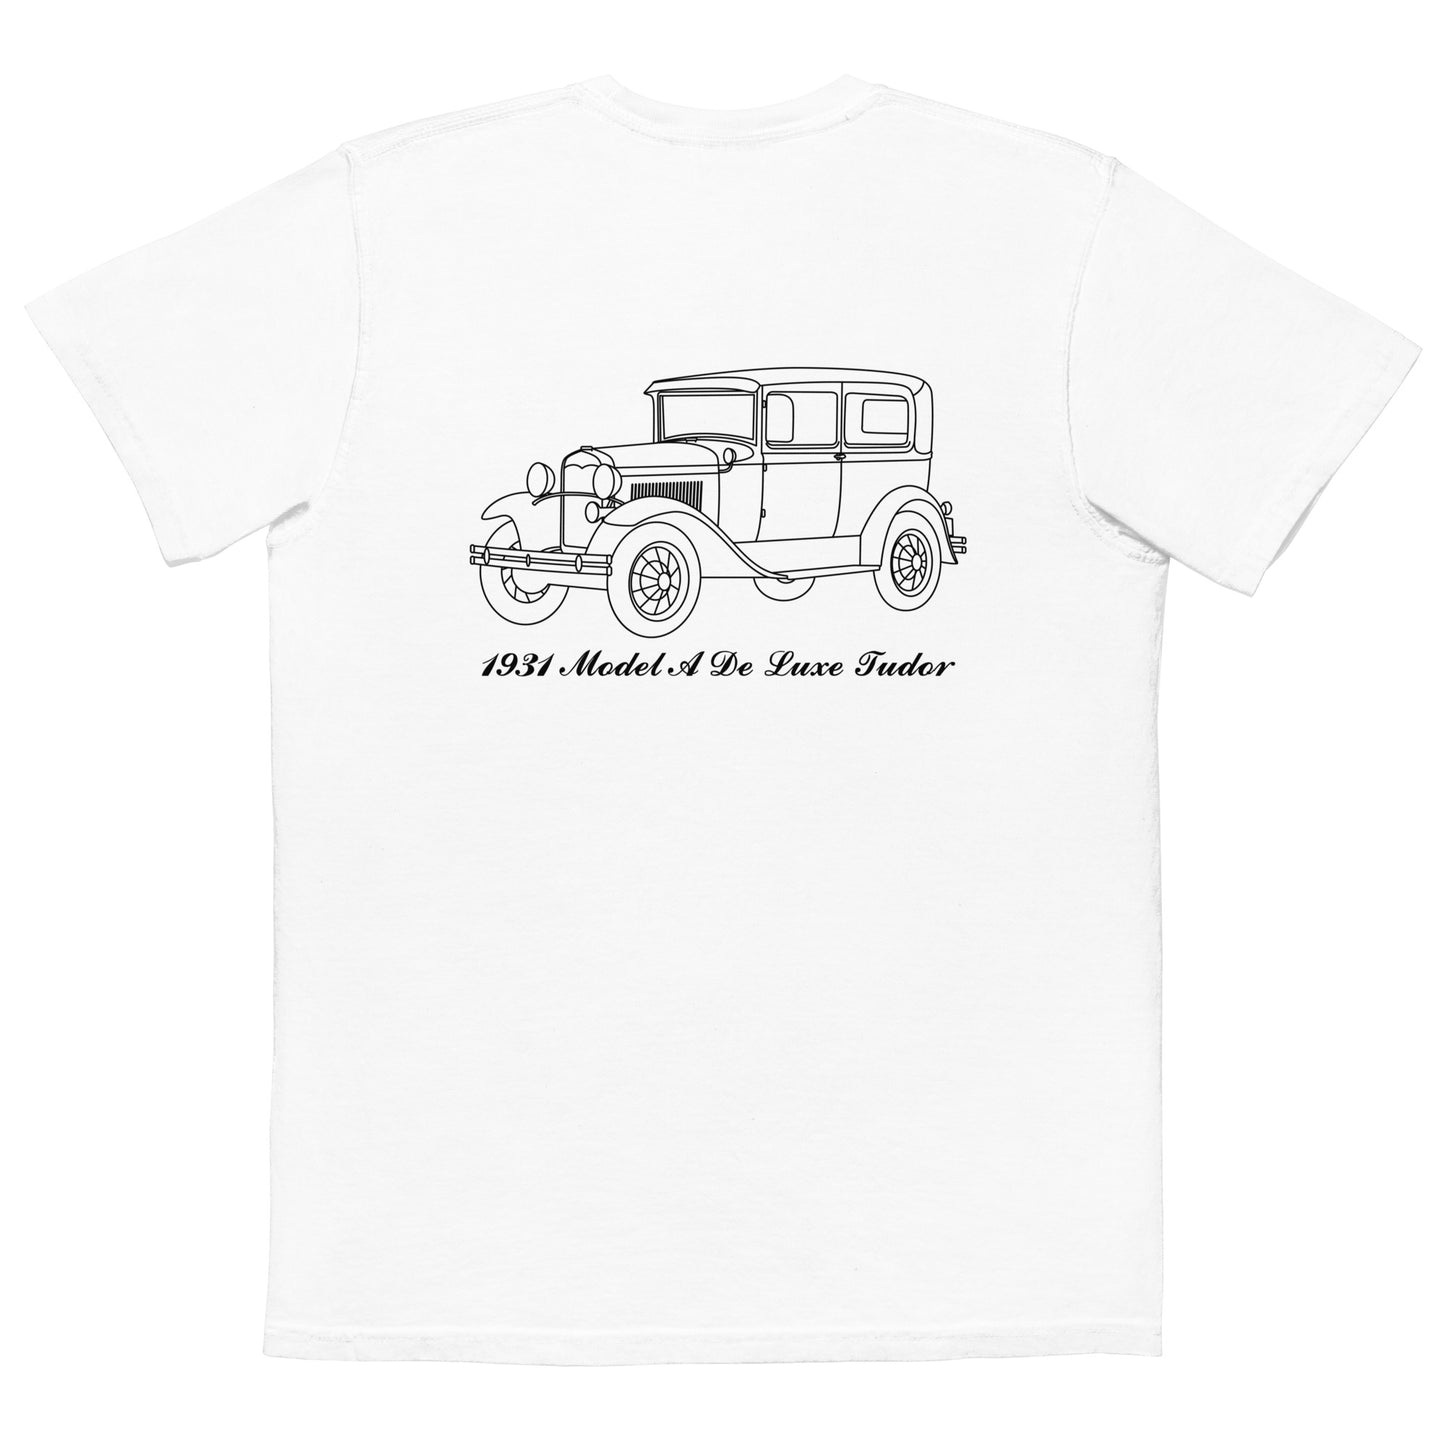 1931 De Luxe Tudor White Pocket T-Shirt